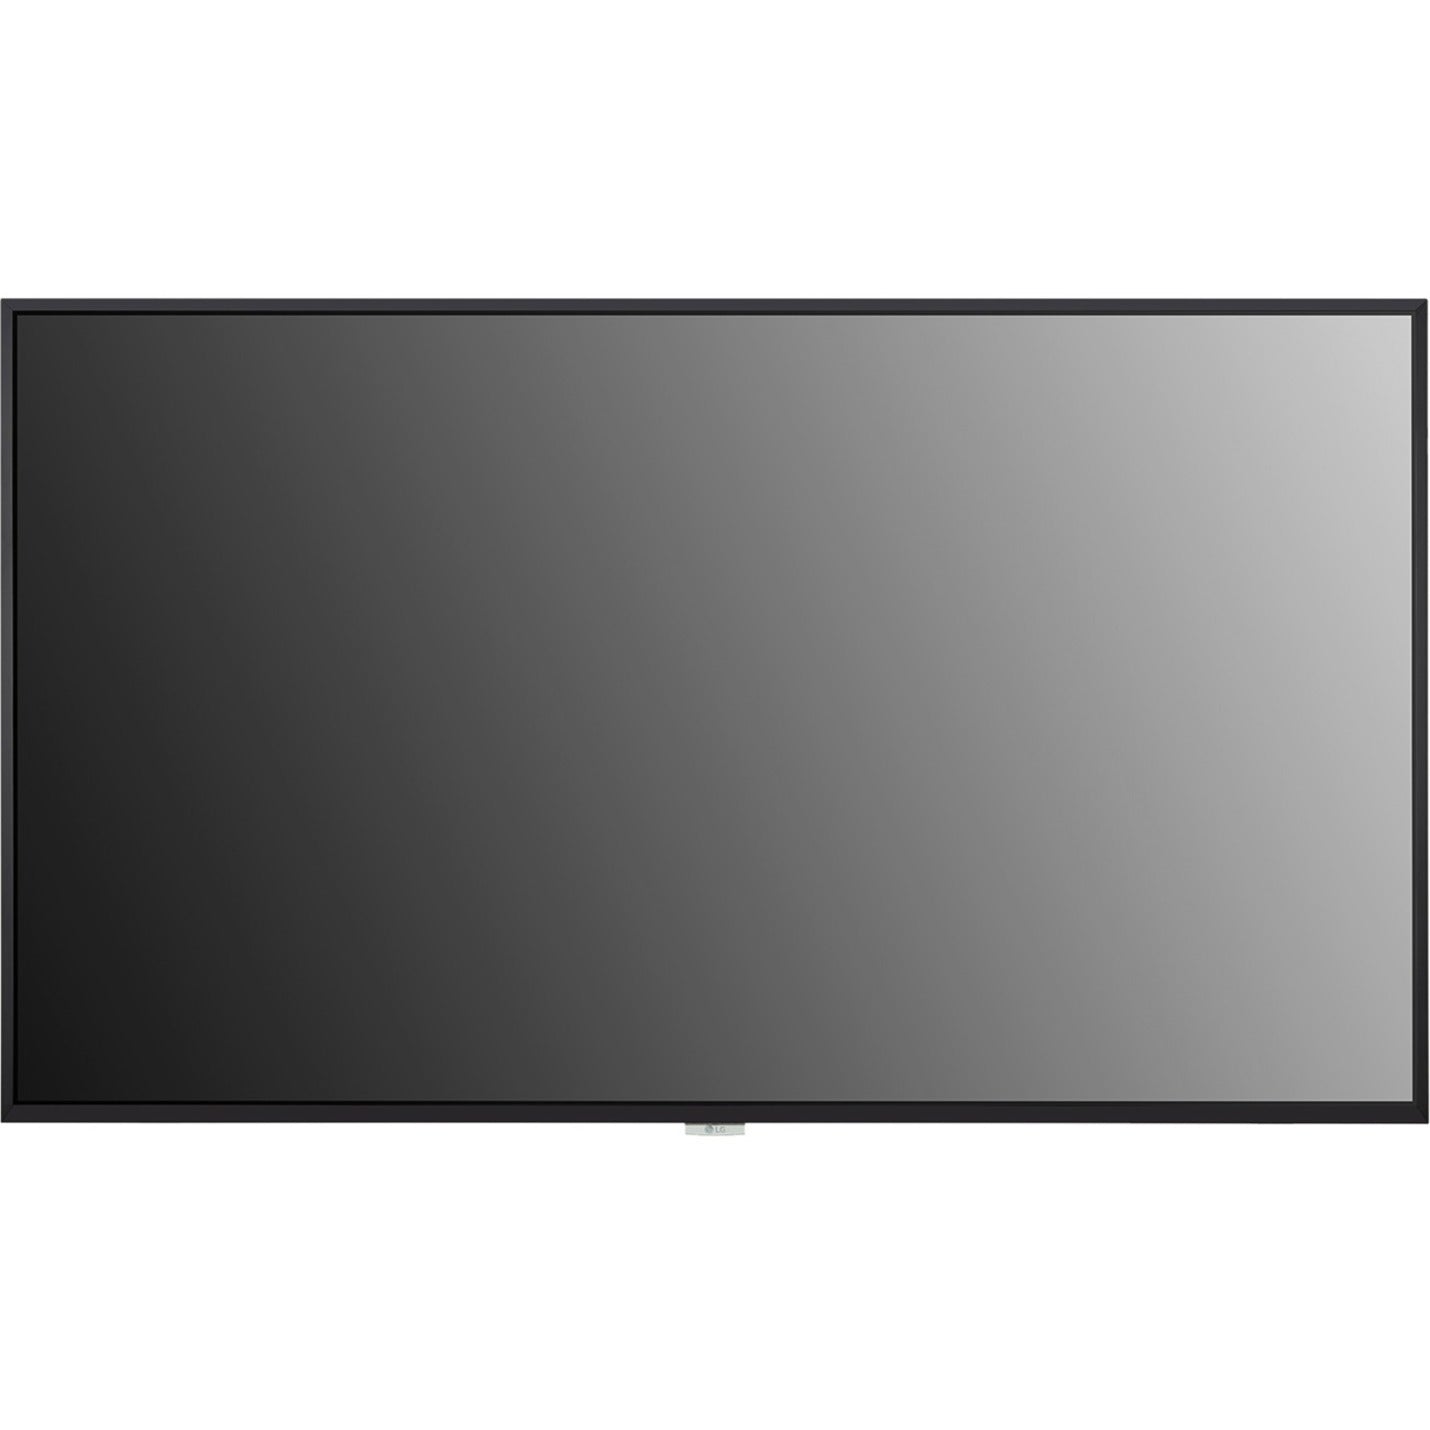 LG 55UH5F-H 55UH5F-H Digital Signage Display, 55" Ultra HD, webOS 4.1, 500 Nit Brightness, 10-bit Color Depth, 95% BT.709 Color Gamut